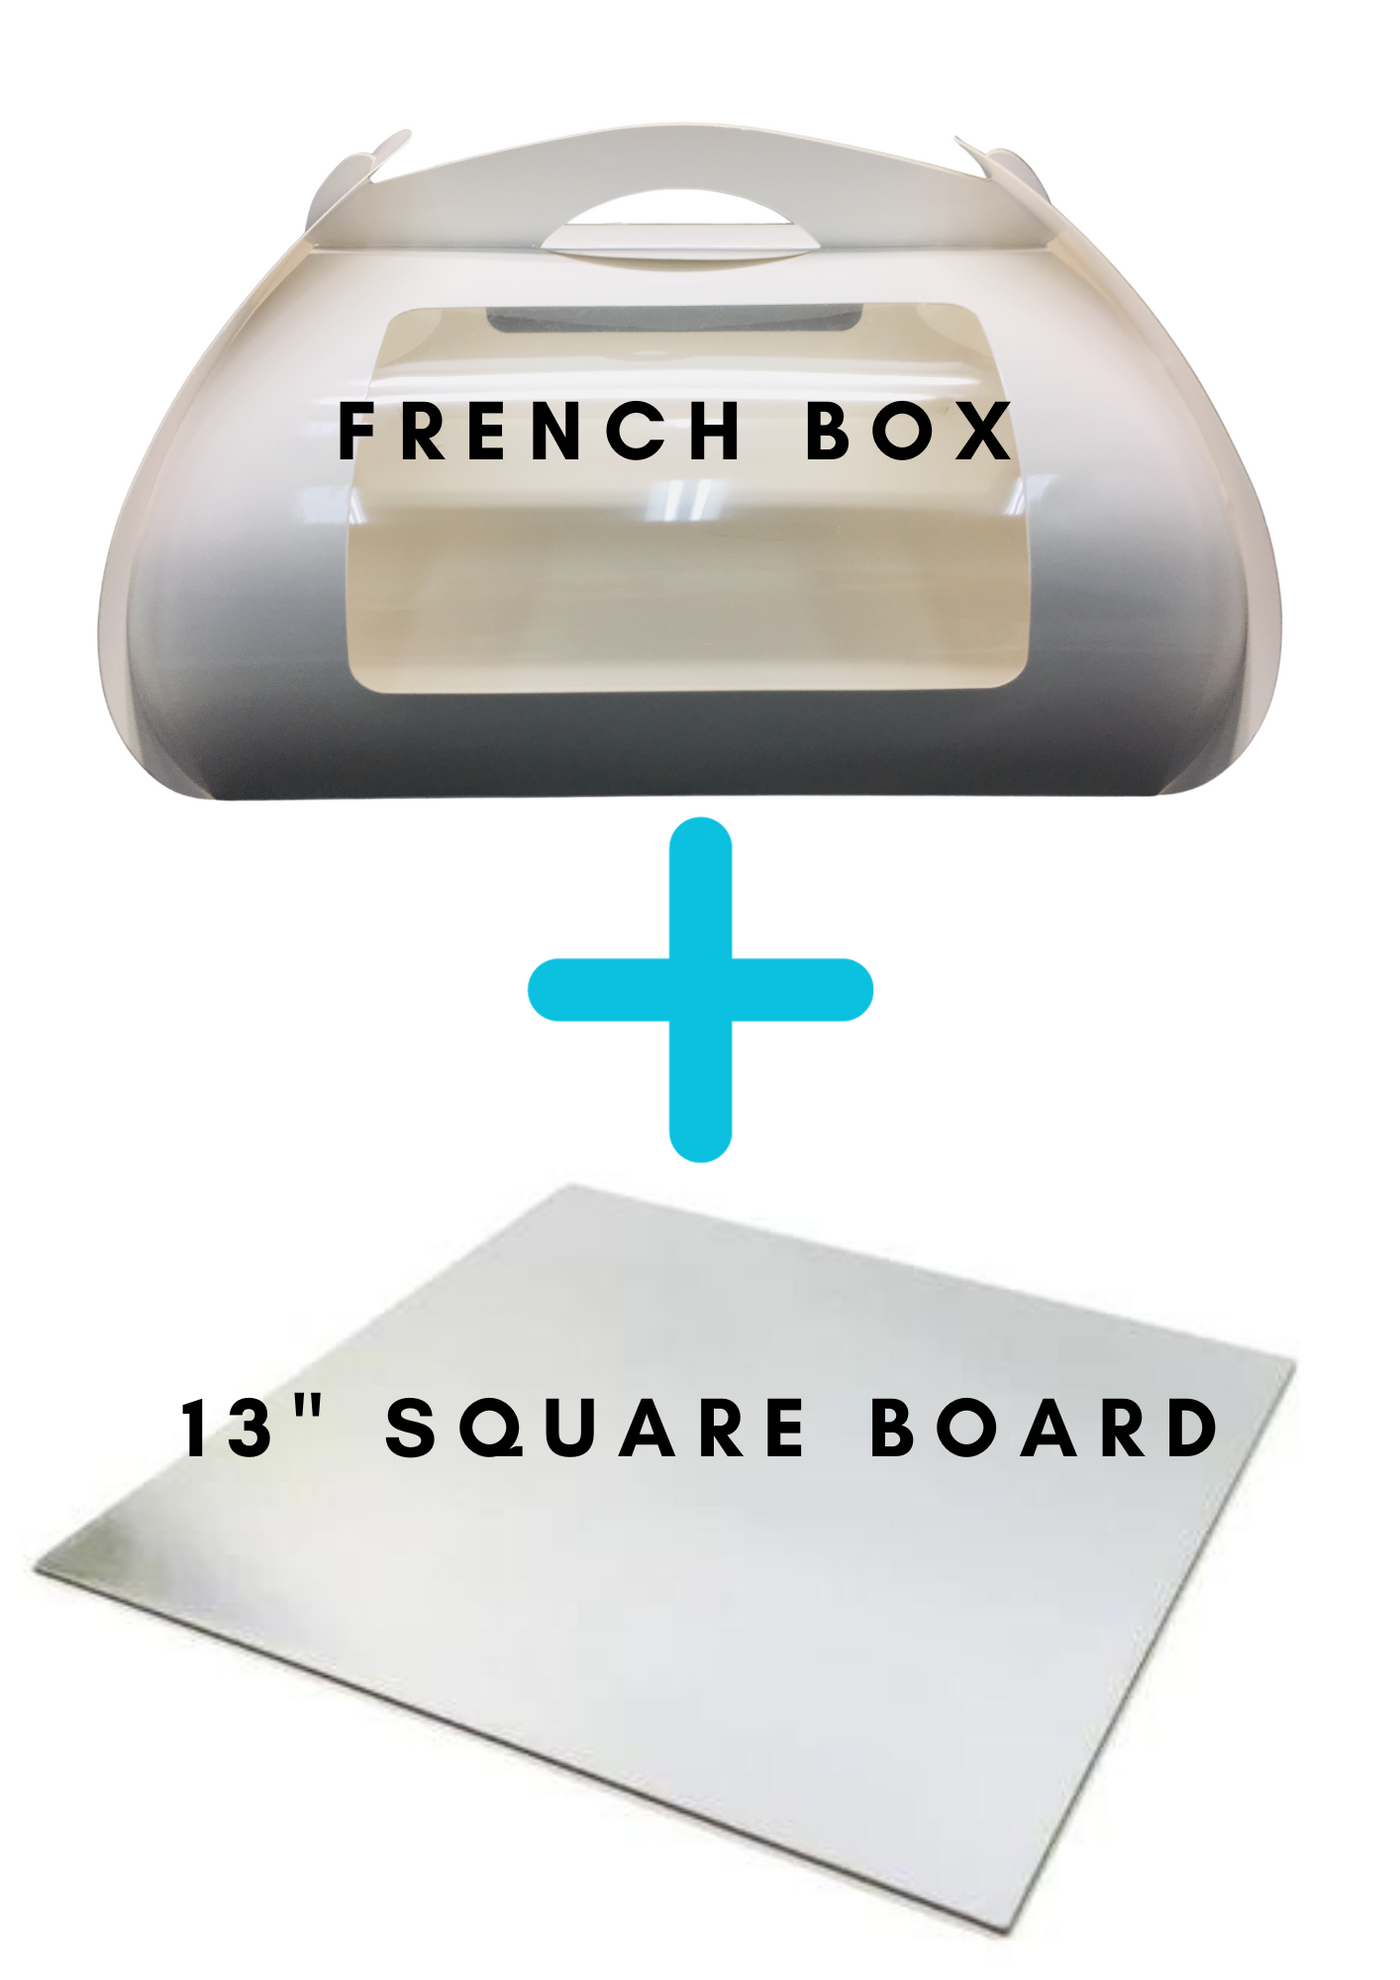 French Box + Silver 13" Board combo